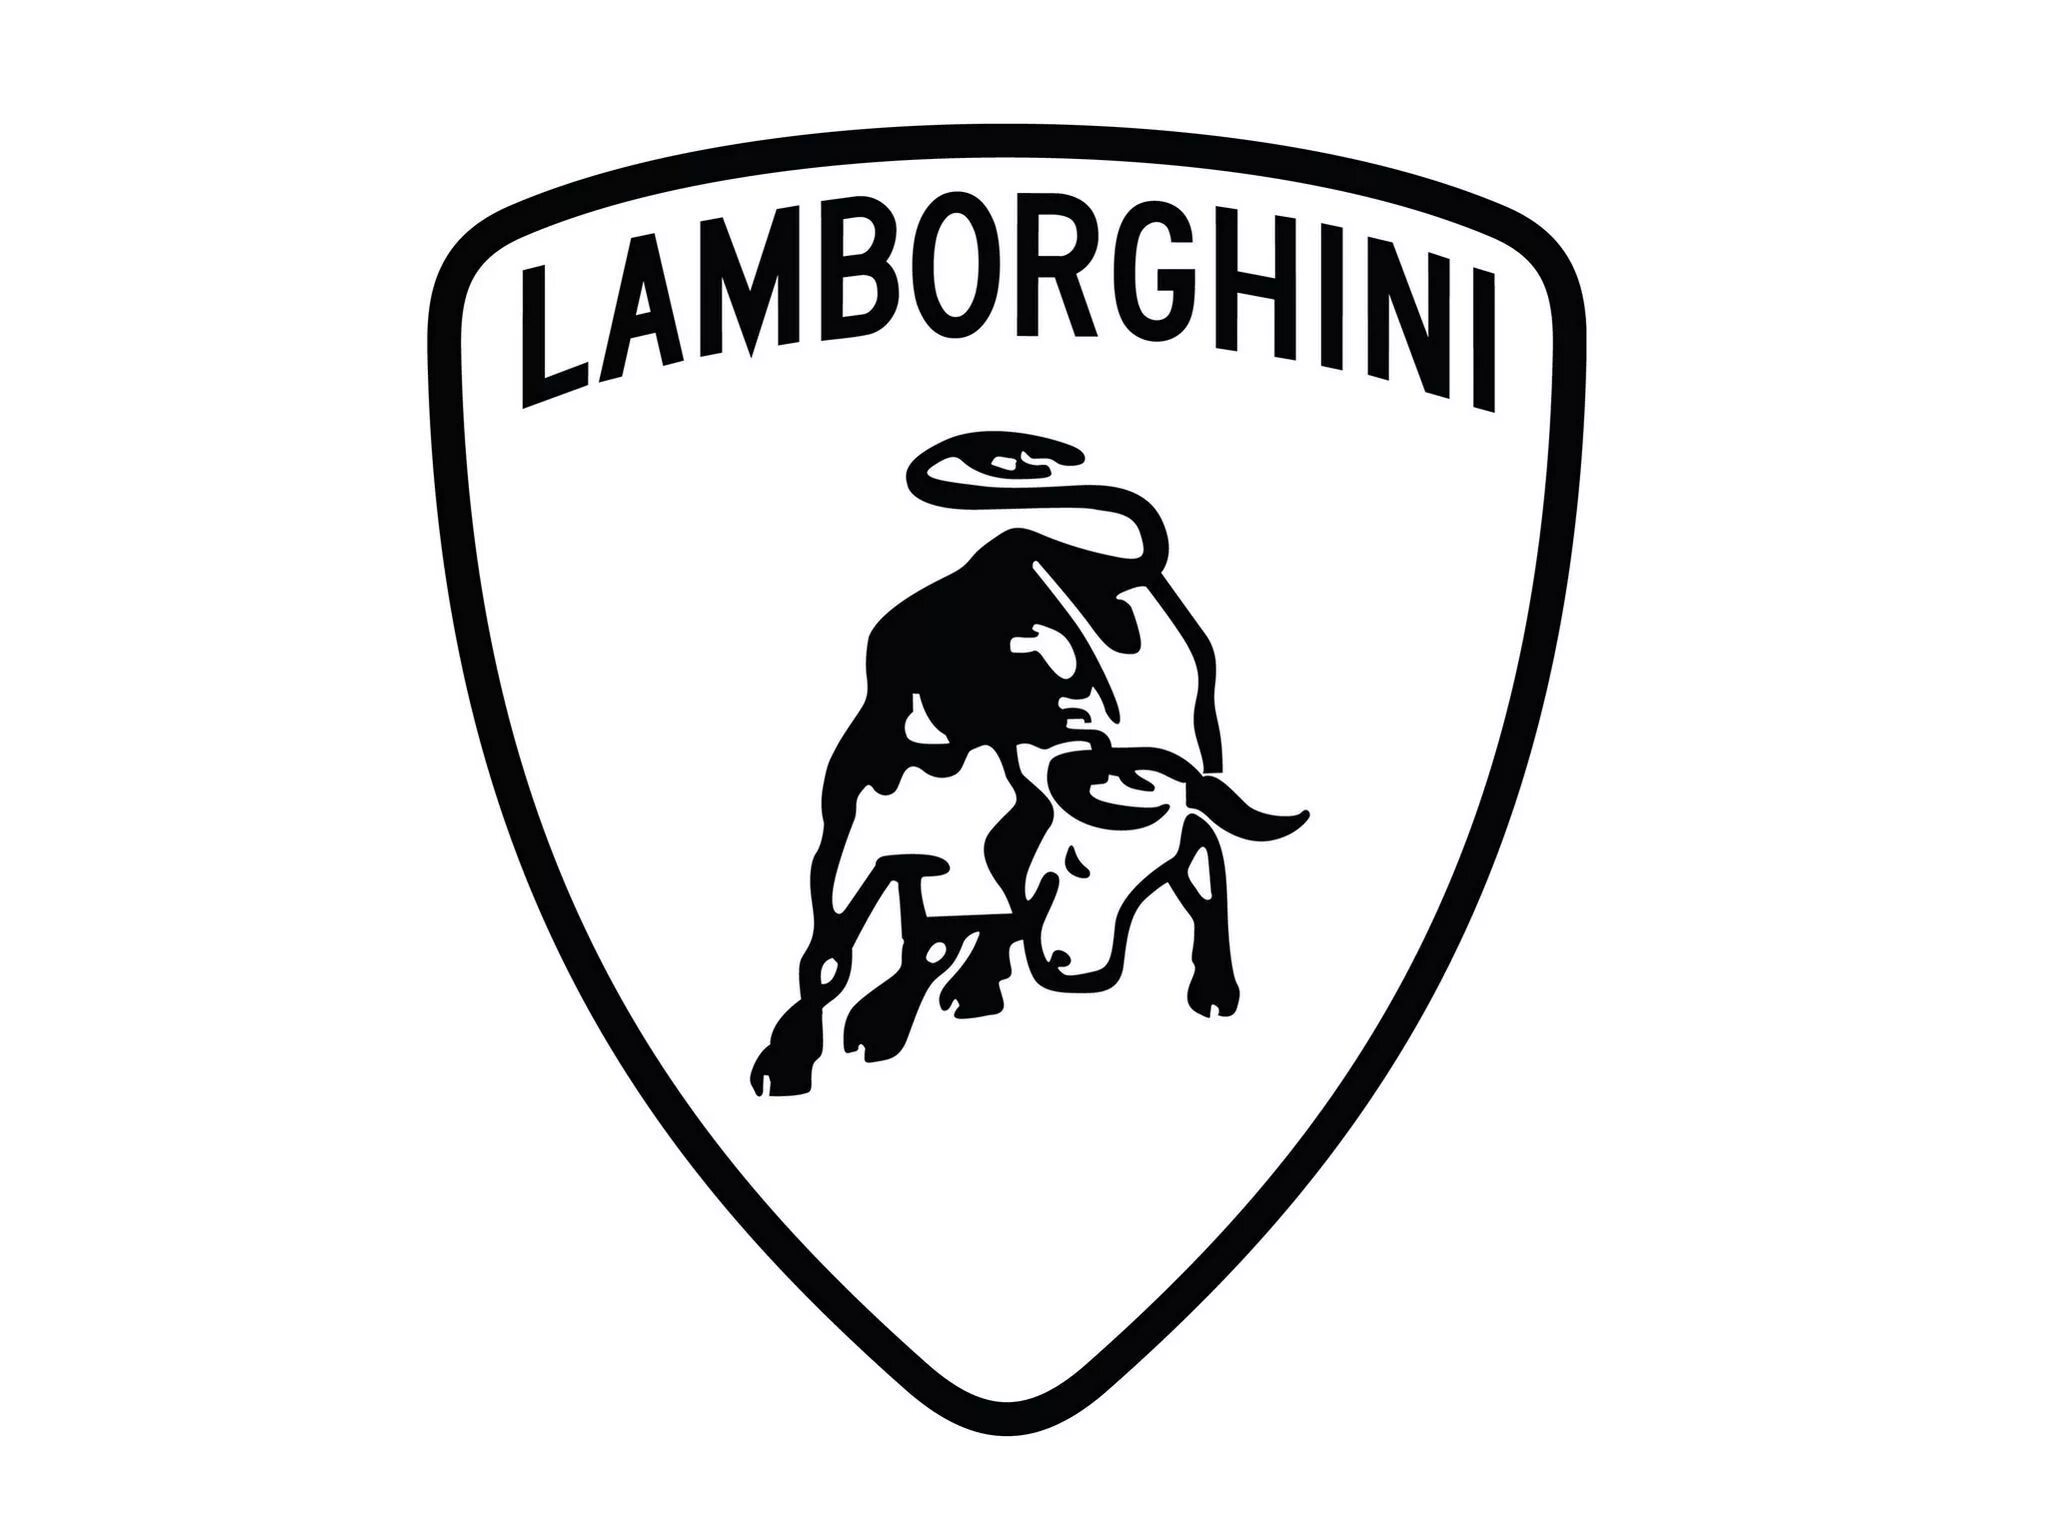 Ламба значок. Логотип Ламборгини. Значок машины Ламборджини. Ламба значок машины. Логотип автомобиля Ламборджини.